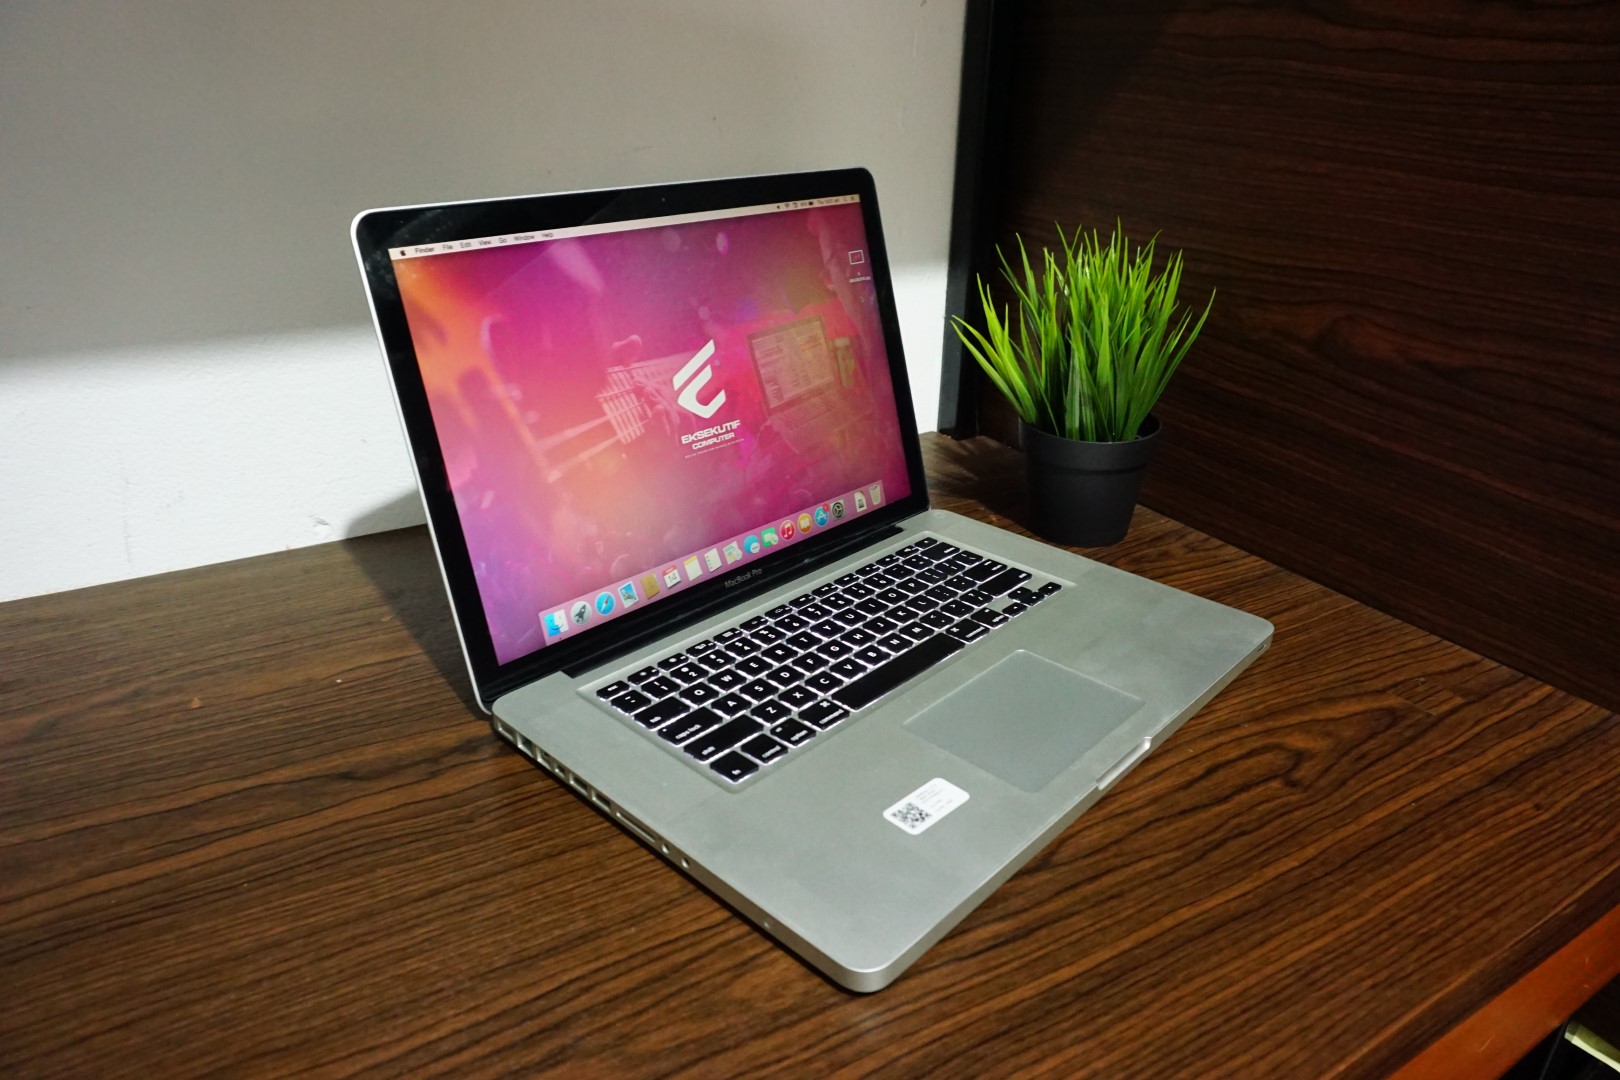 Jual Laptop Macbook Pro 15 MD103 Mid 2012